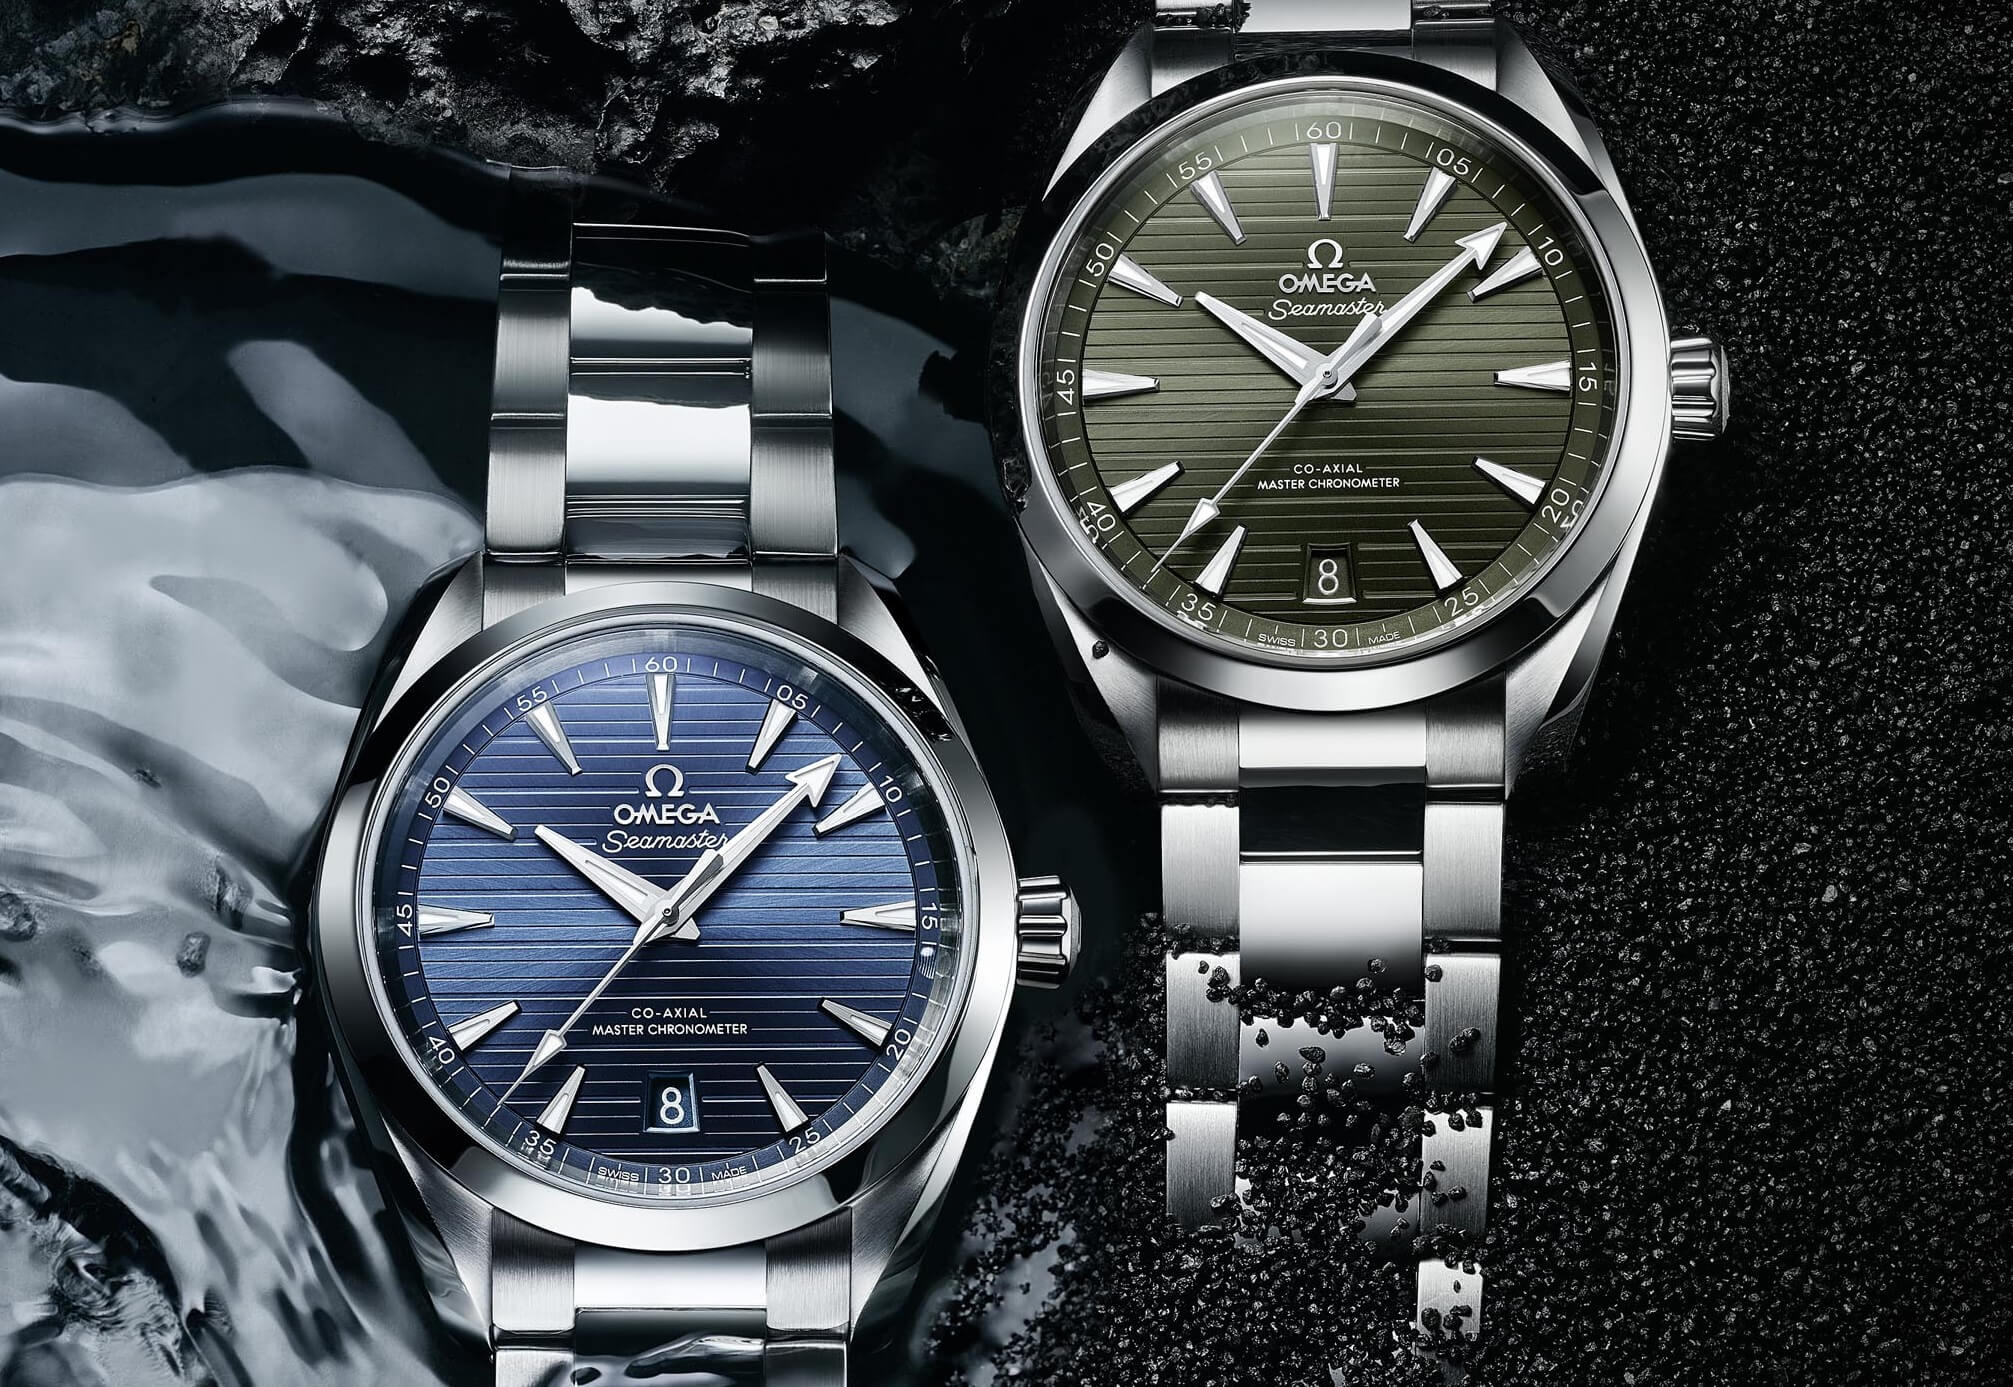 2 New Fake Omega Aqua Terra Watches Of 2020